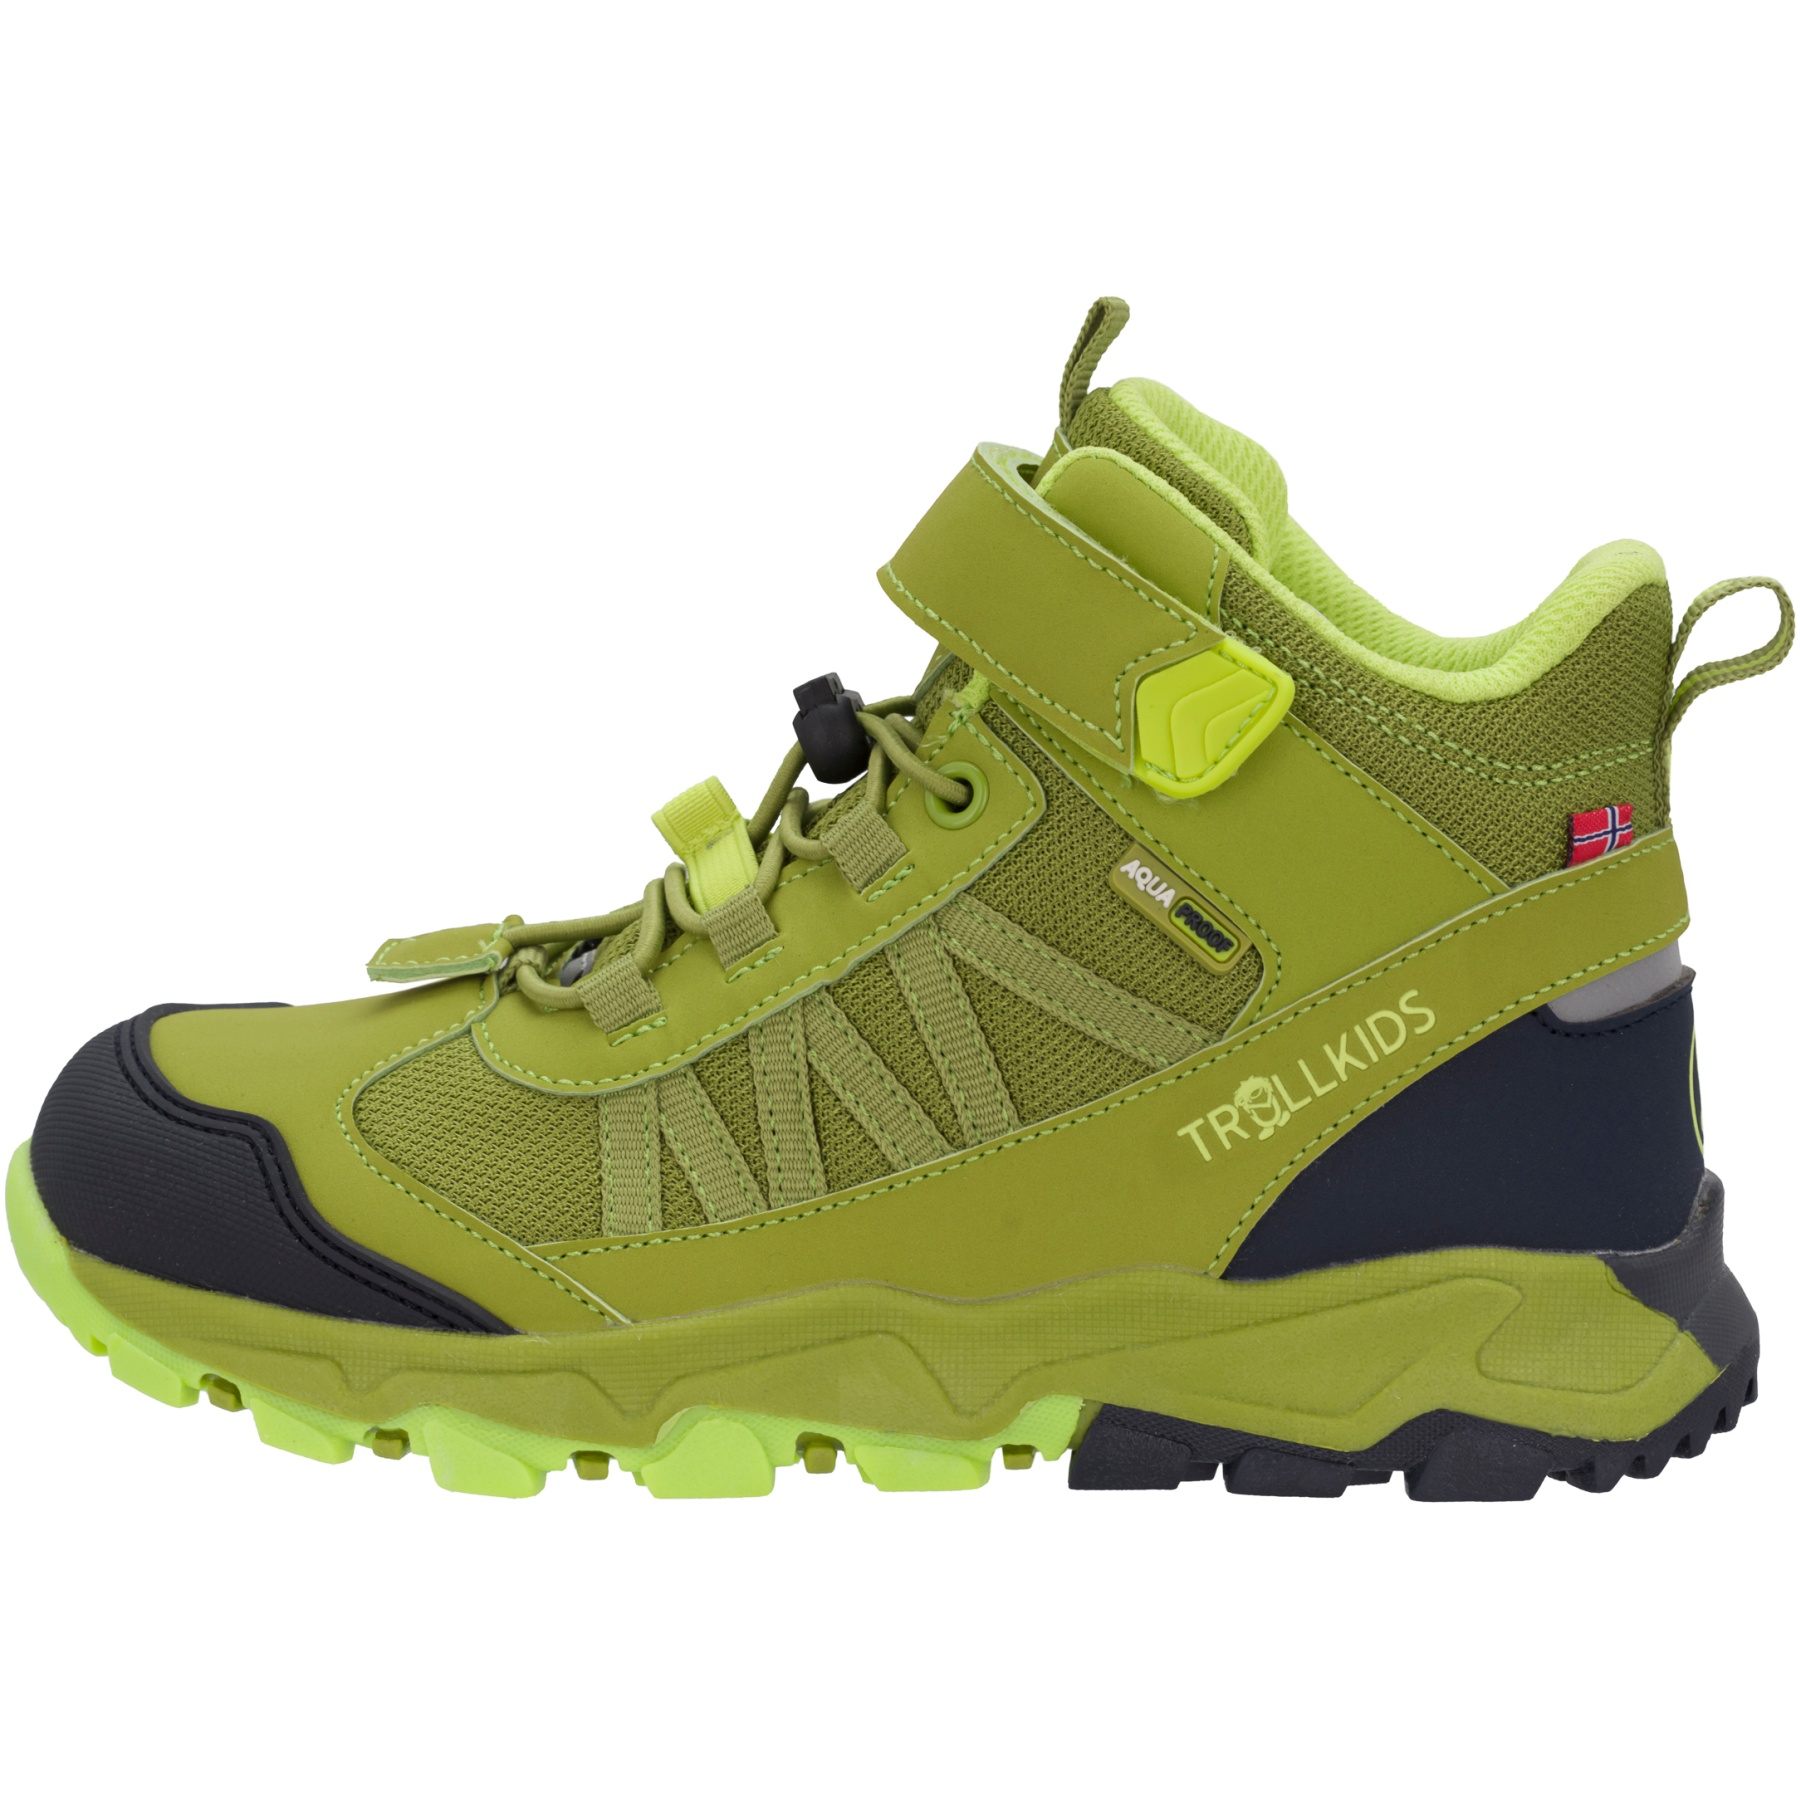 Picture of Trollkids Tronfjell Mid Kids Hiker Shoes - Kiwi/Green Lizard